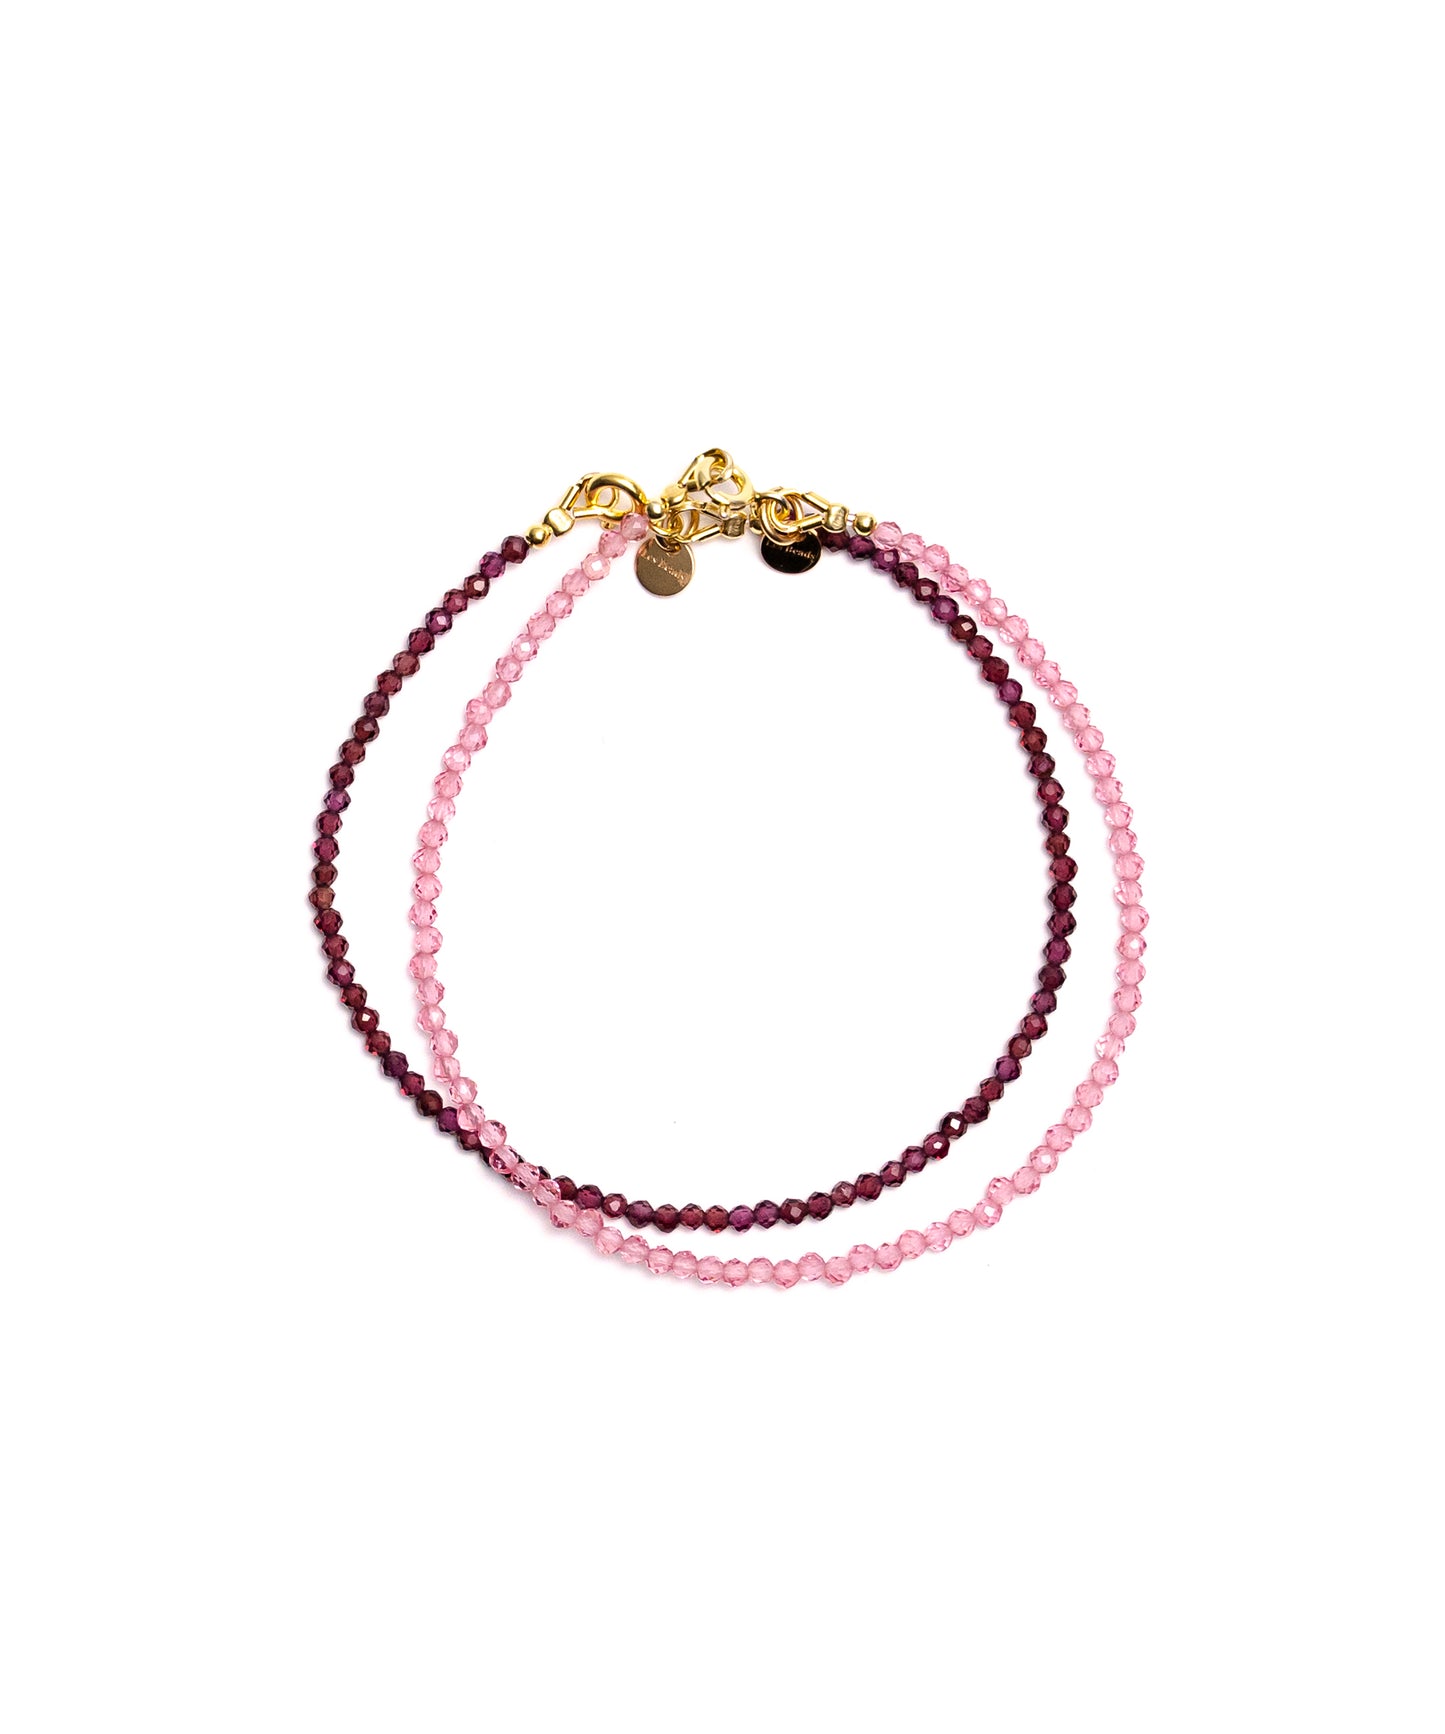 Jomalig Bracelet Set - Pink Crystal Shades